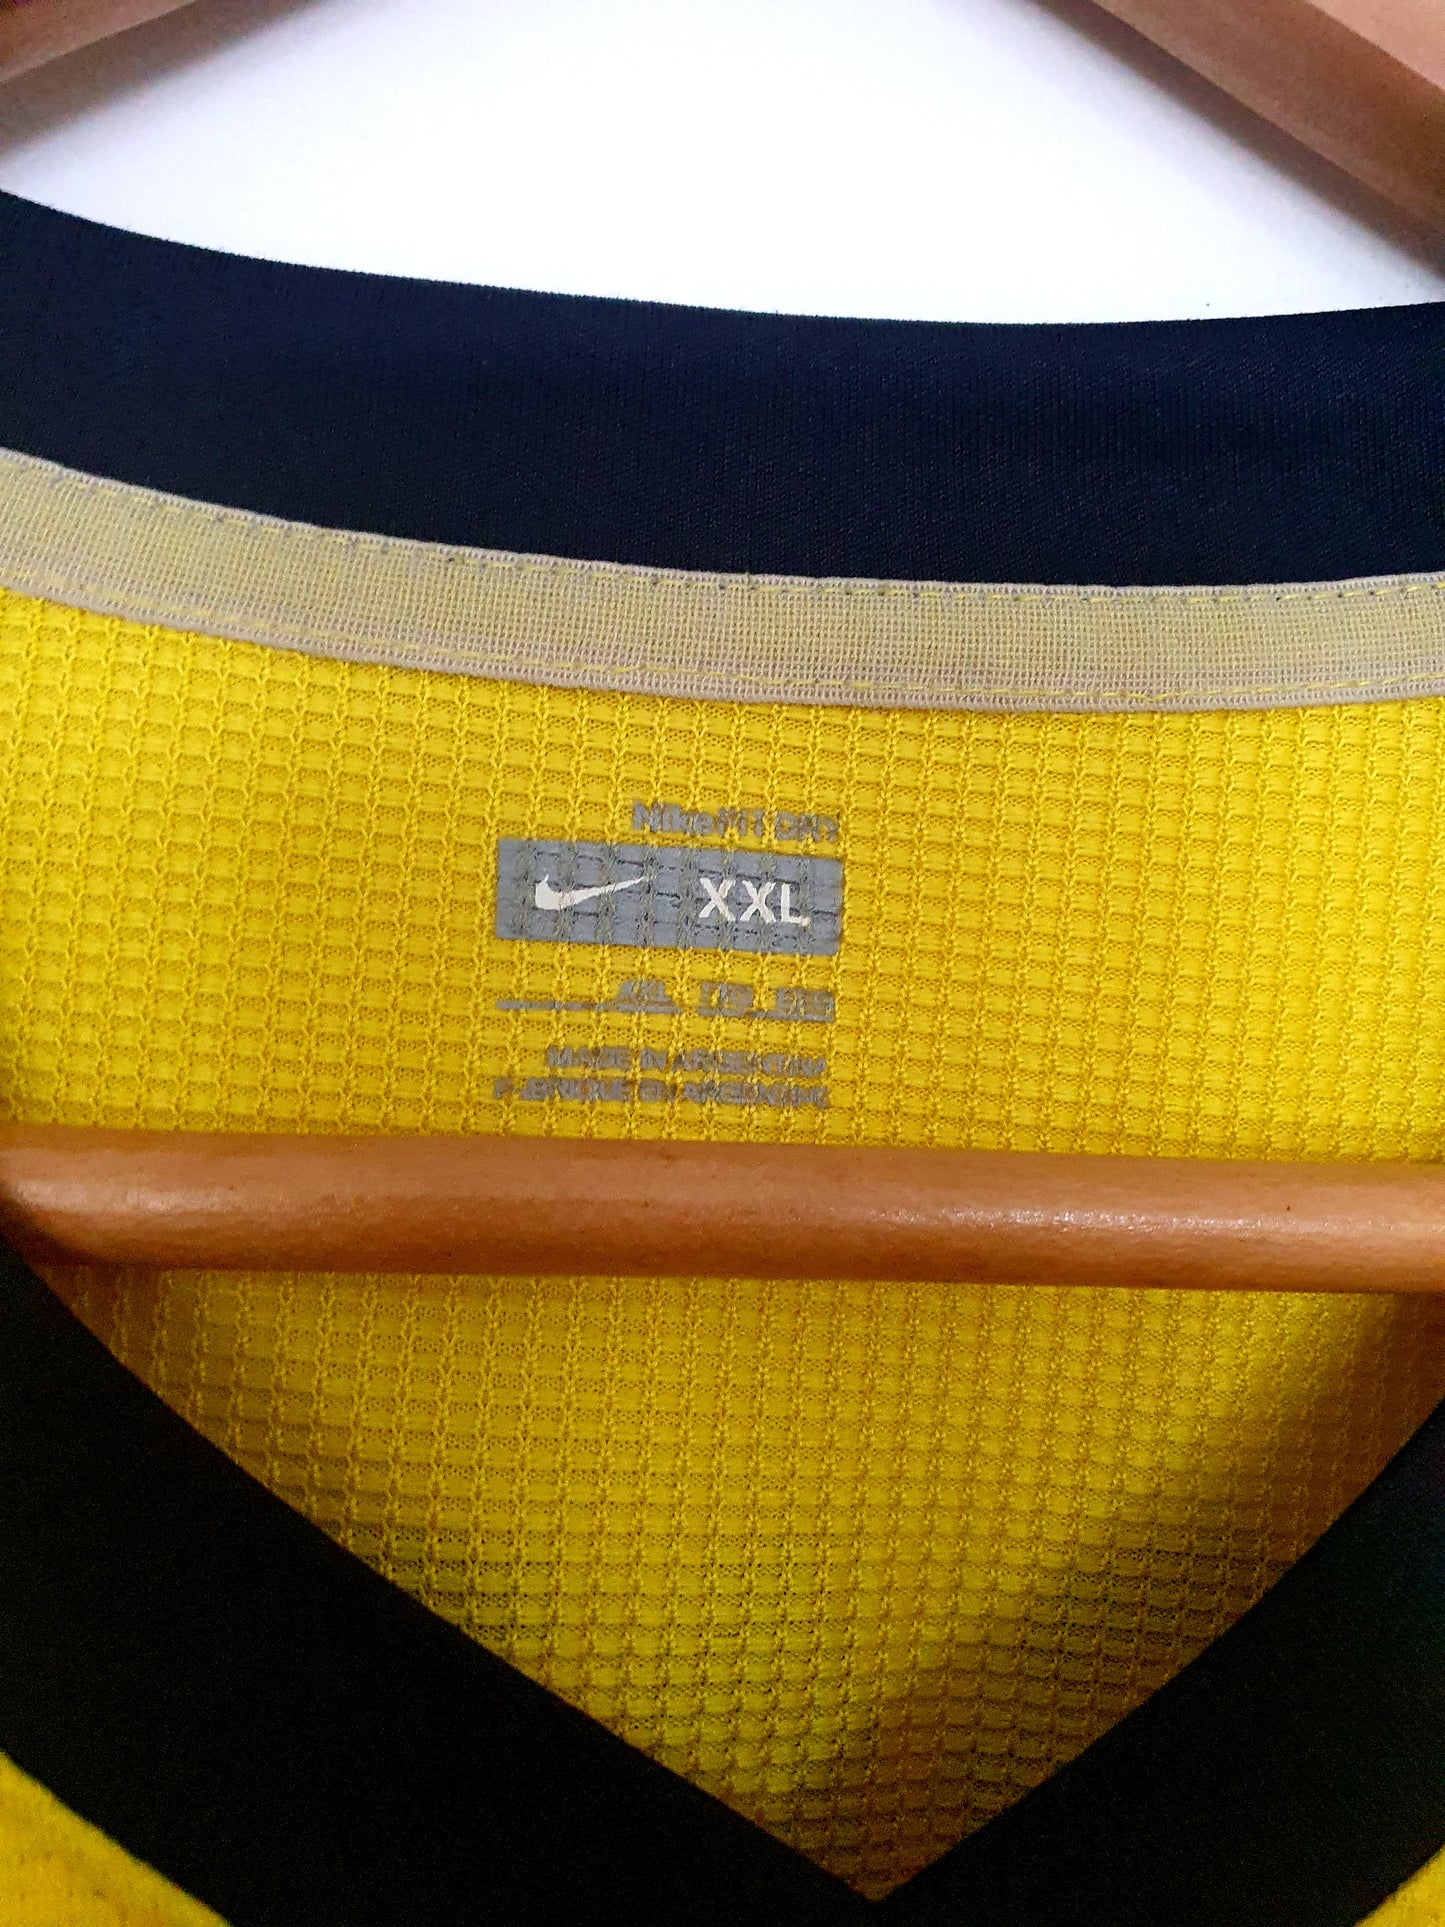 Nike Boca Juniors 08/09 Away Shirt XXL